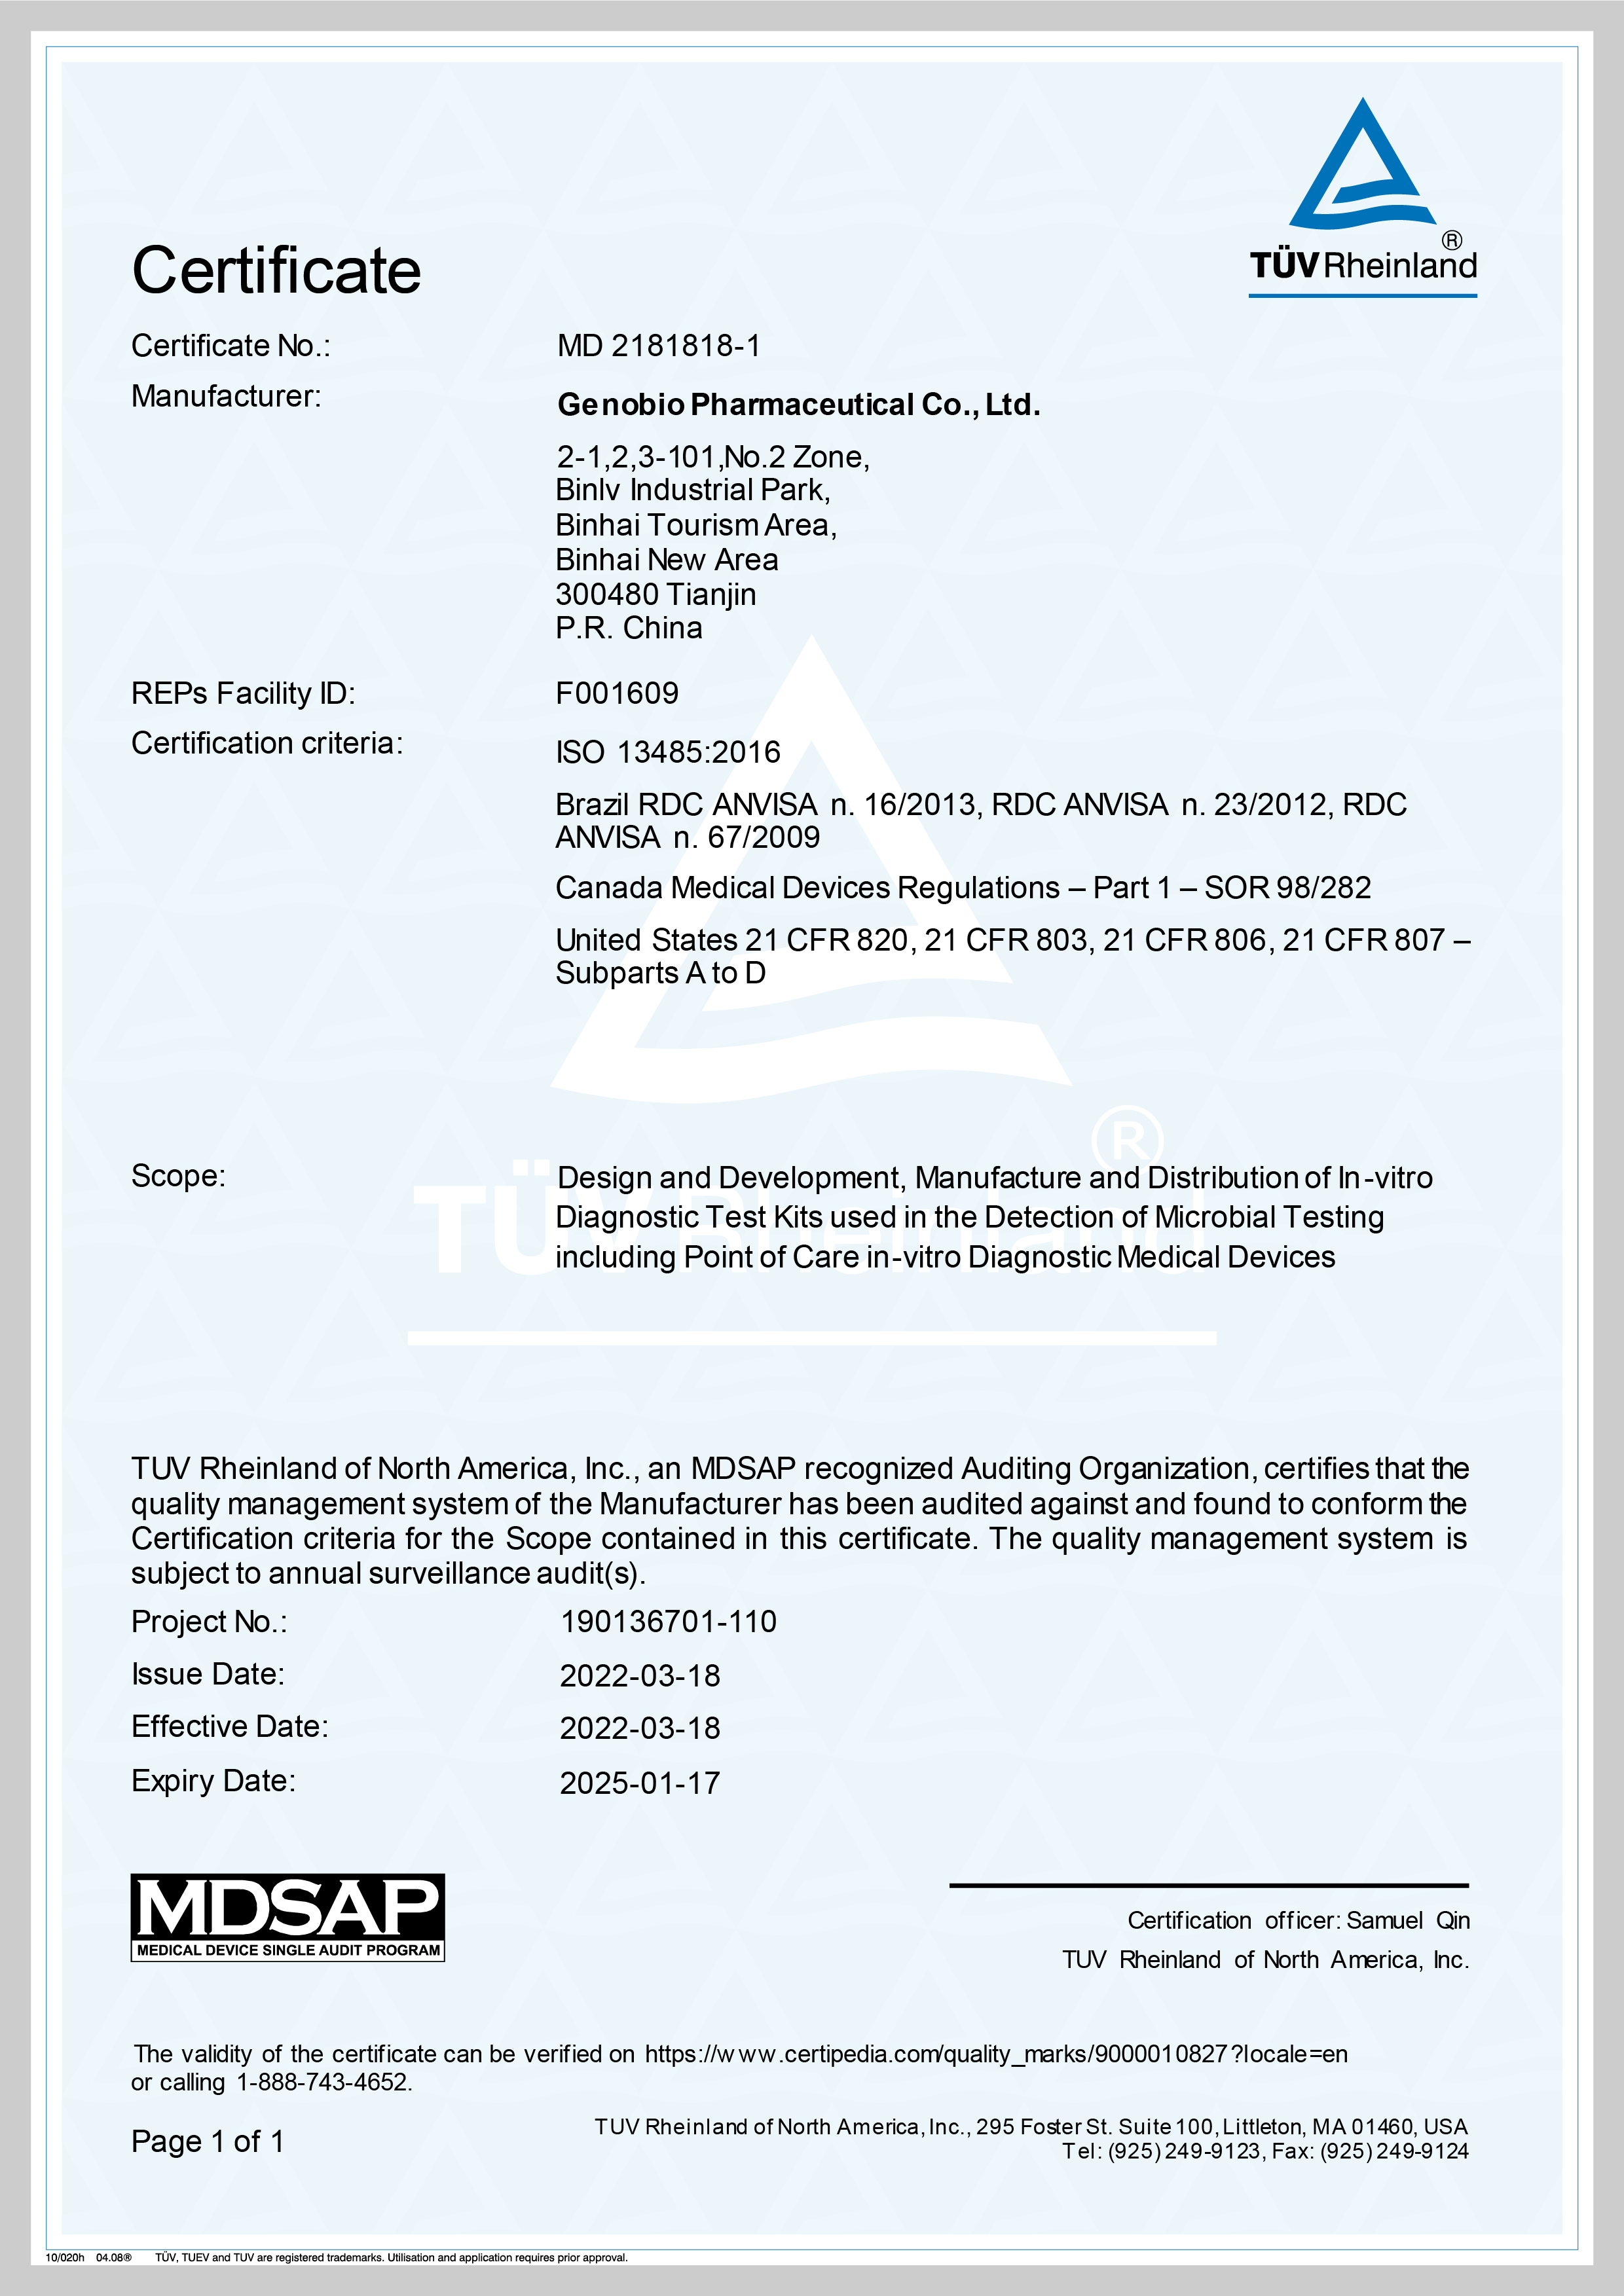 Genobio گواهینامه MDSAP را دریافت کرد - بالاترین استاندارد نظارتی در صنعت تولید تجهیزات پزشکی